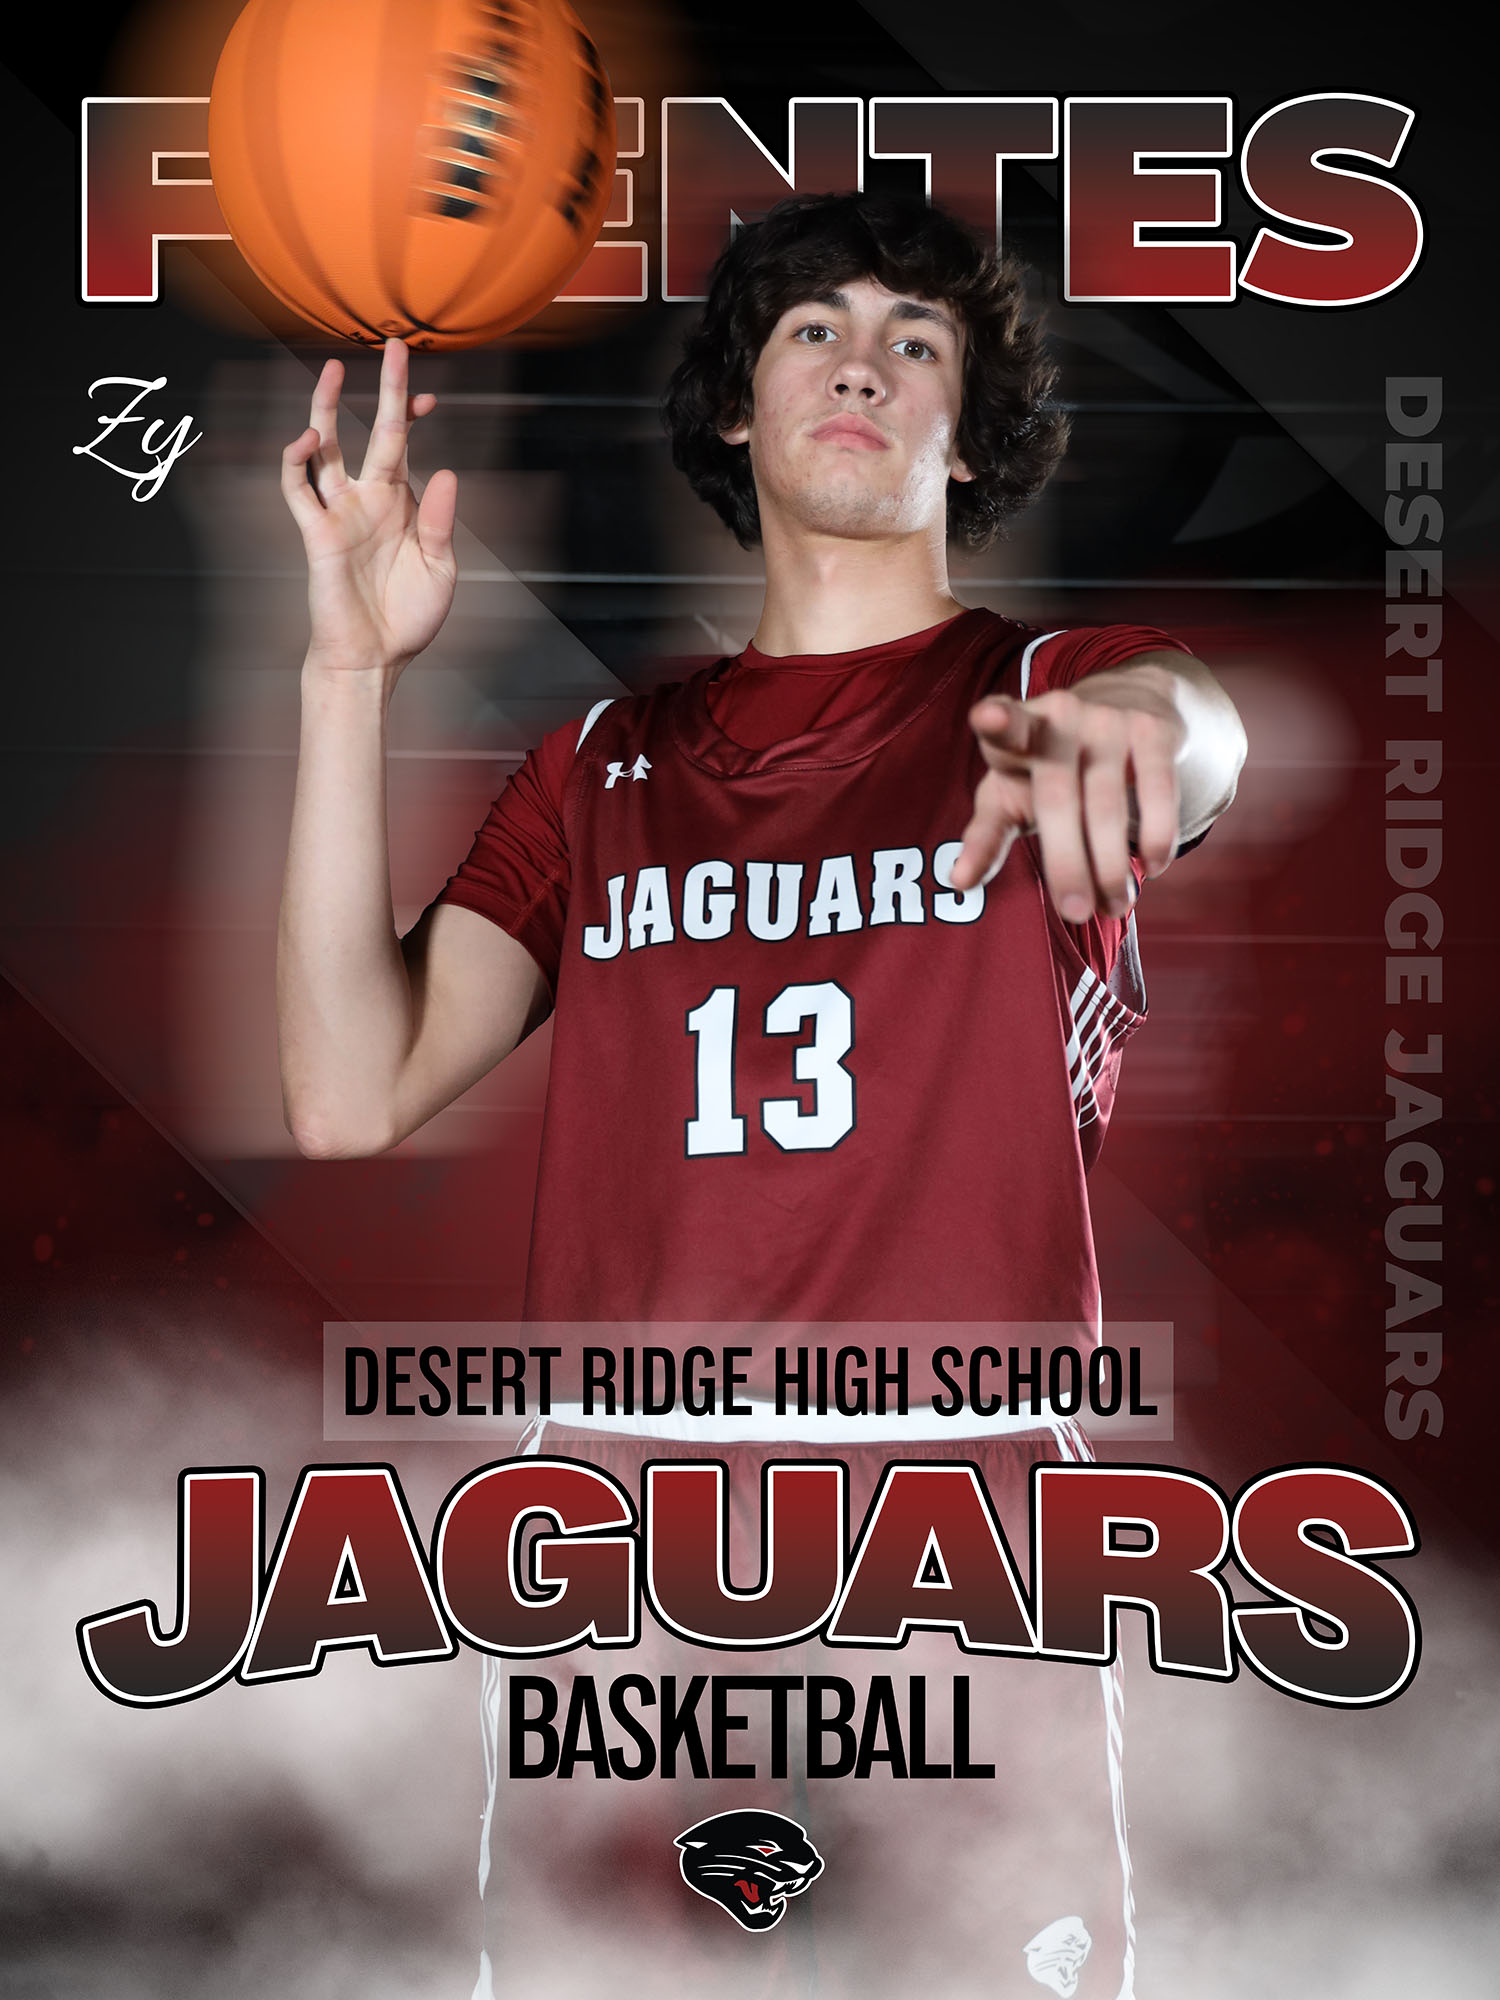 Desert Ridge Jaguars Basketball player Zy Fuentes